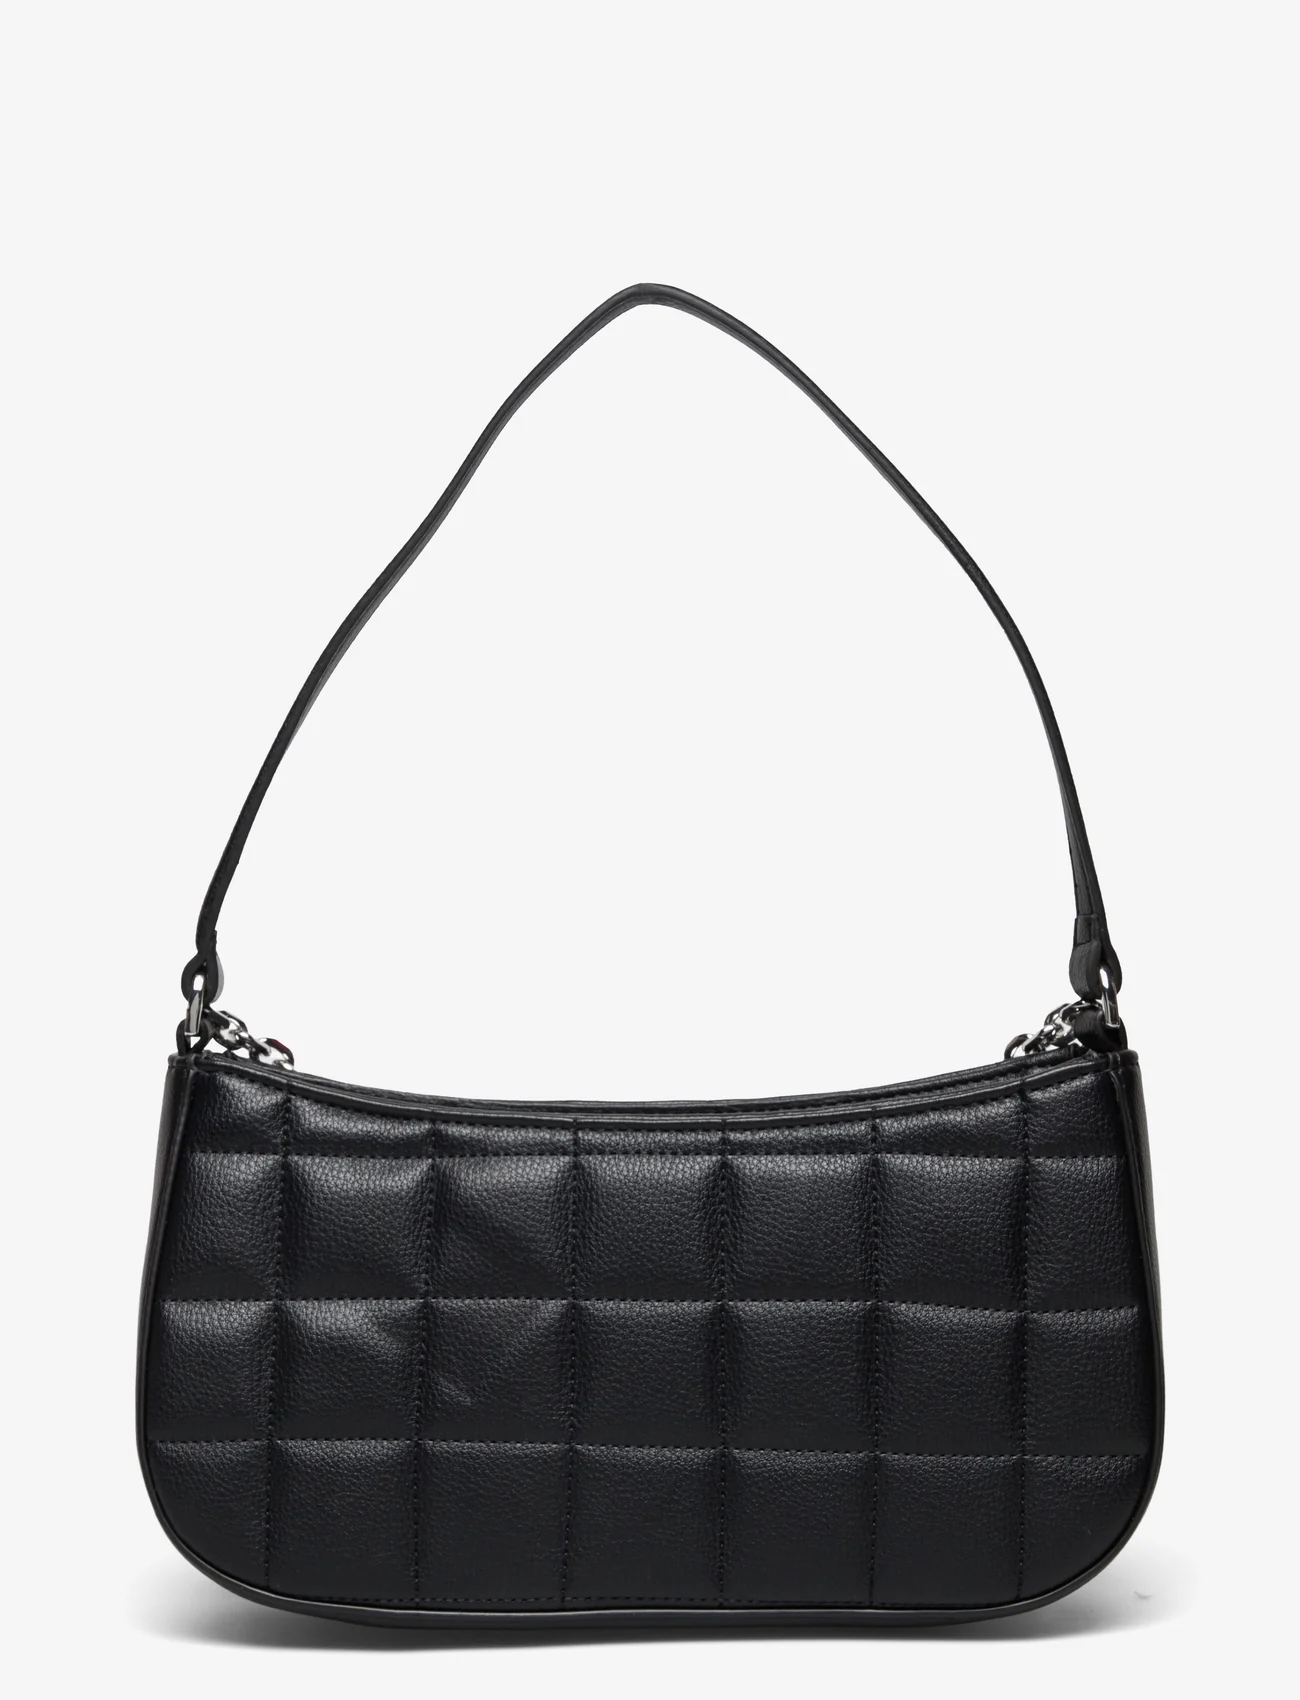 Calvin Klein - SQUARE QUILT CHAIN ELONGATED BAG - födelsedagspresenter - ck black - 1